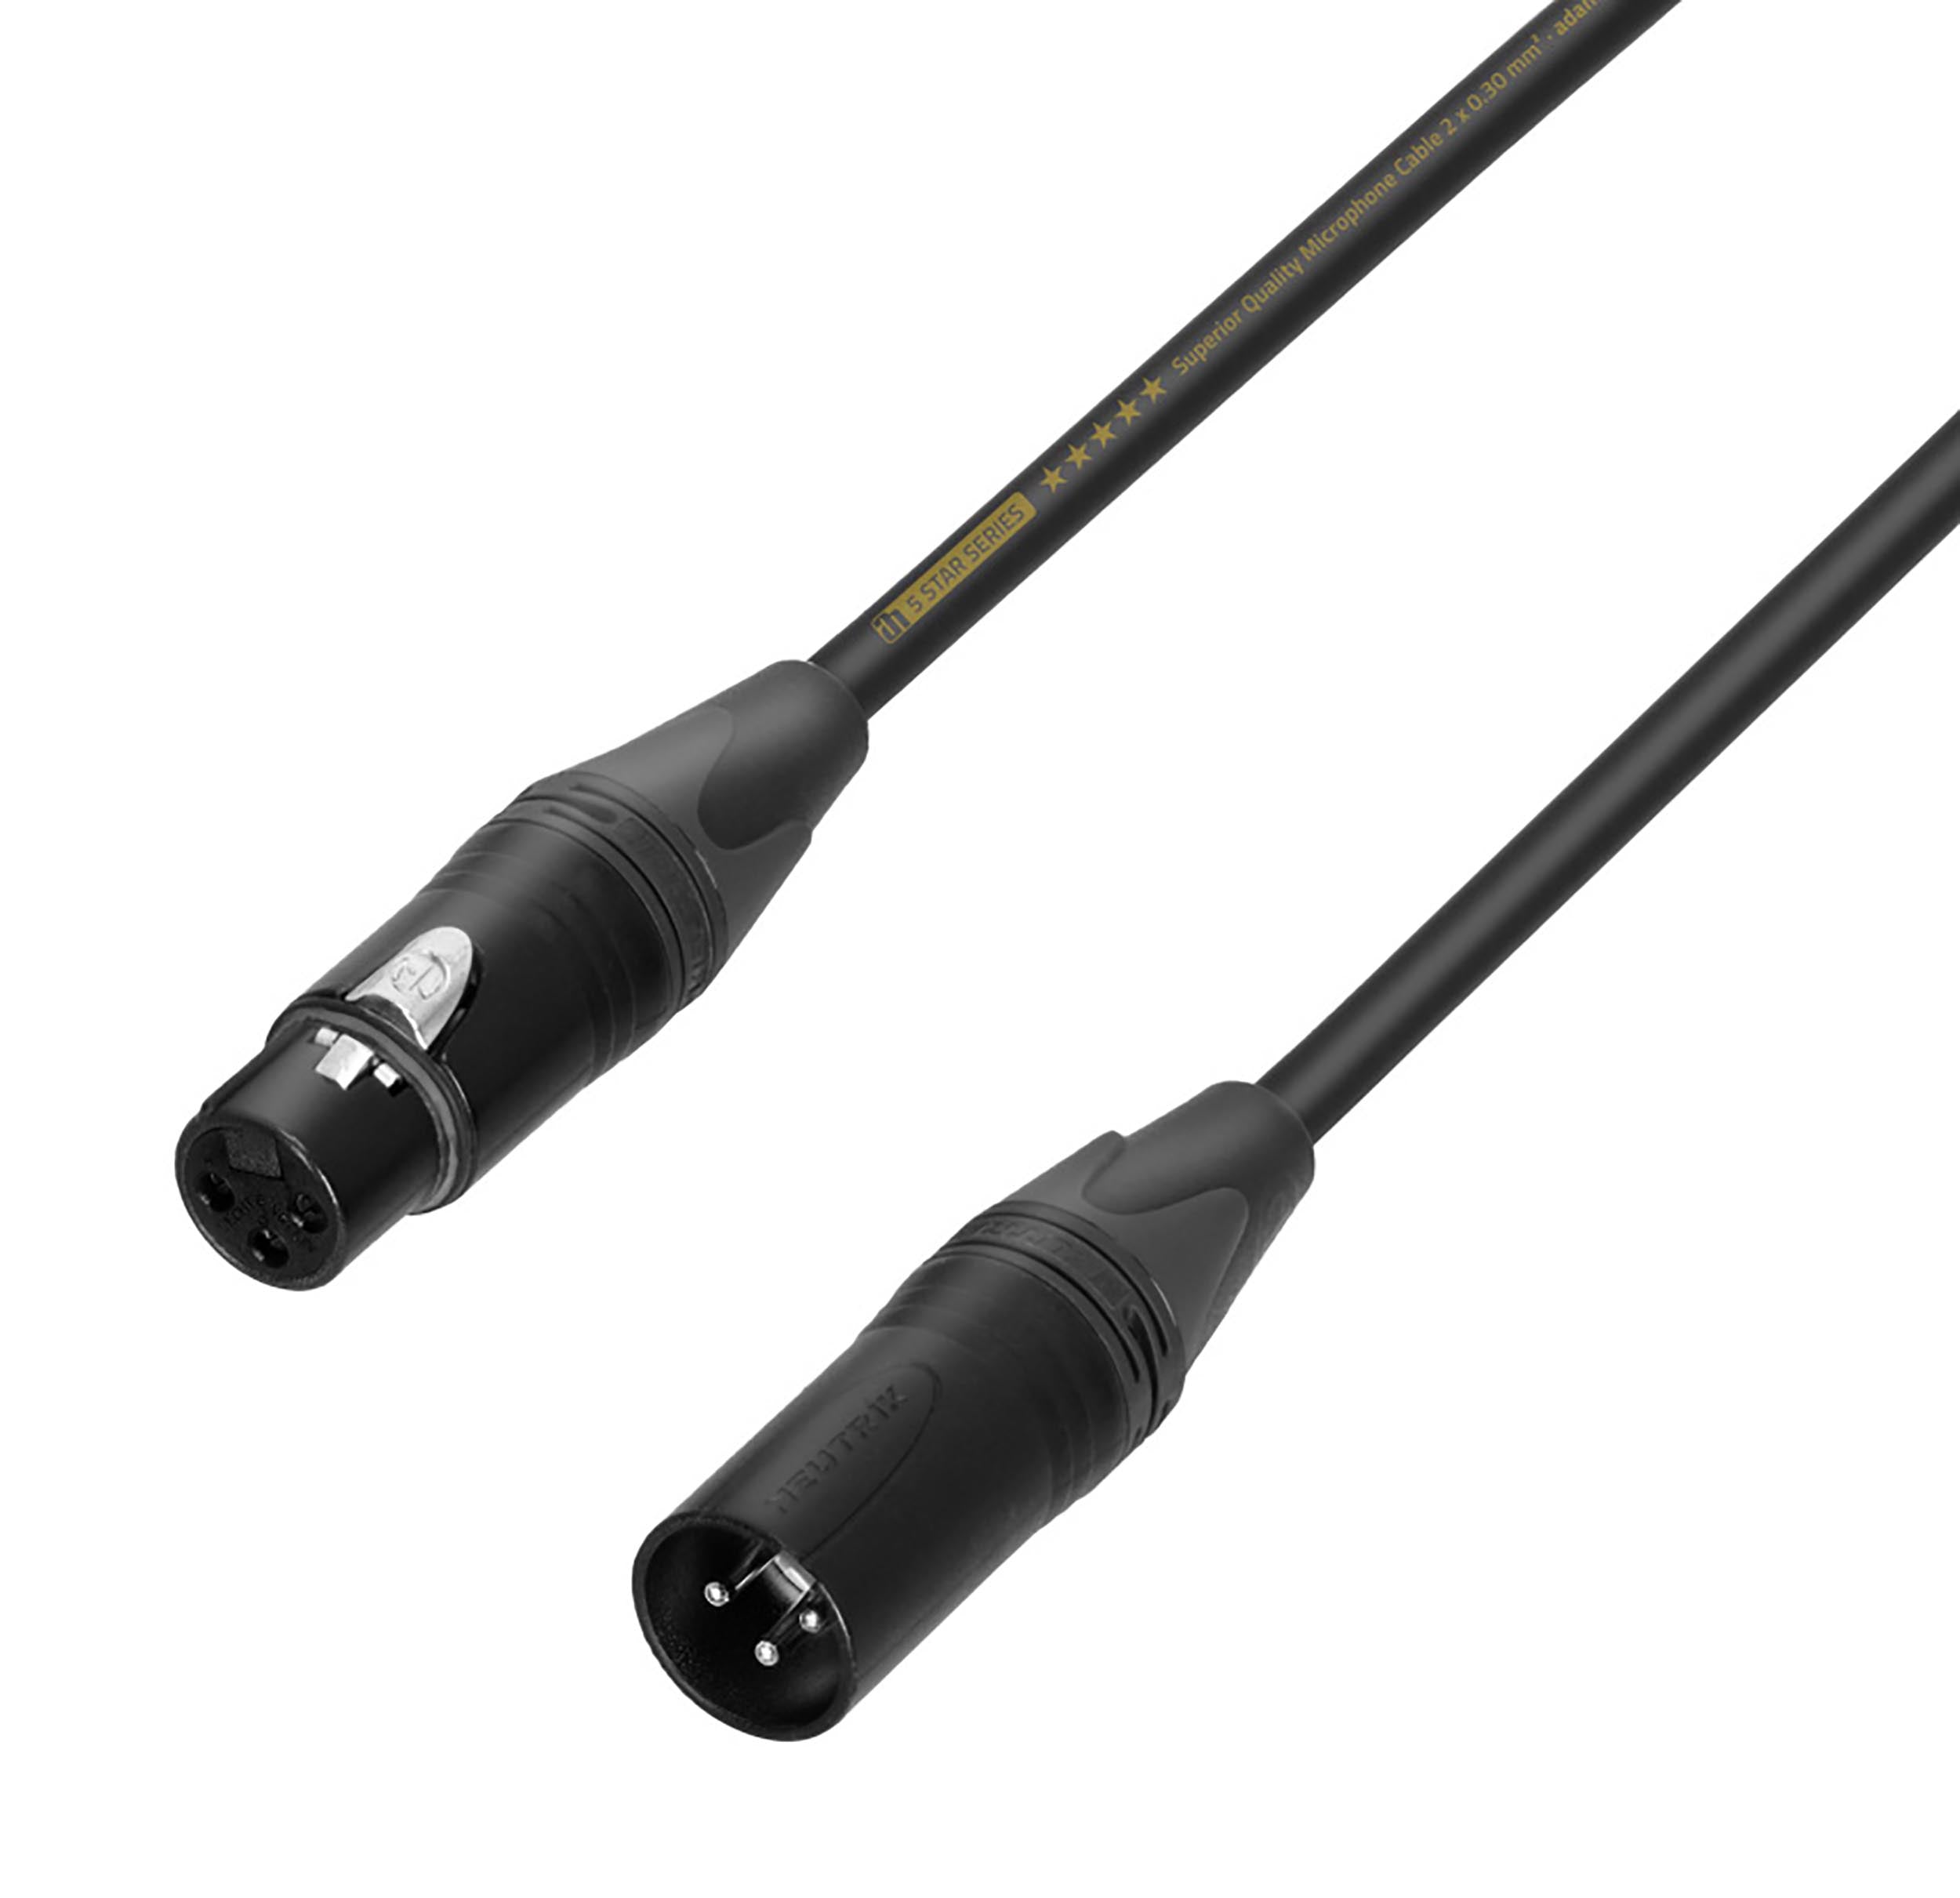 Adam Hall Cables 5 STAR MMF 0500, Microphone Cable Neutrik XLR Female to XLR Male - 5 M by Adam Hall